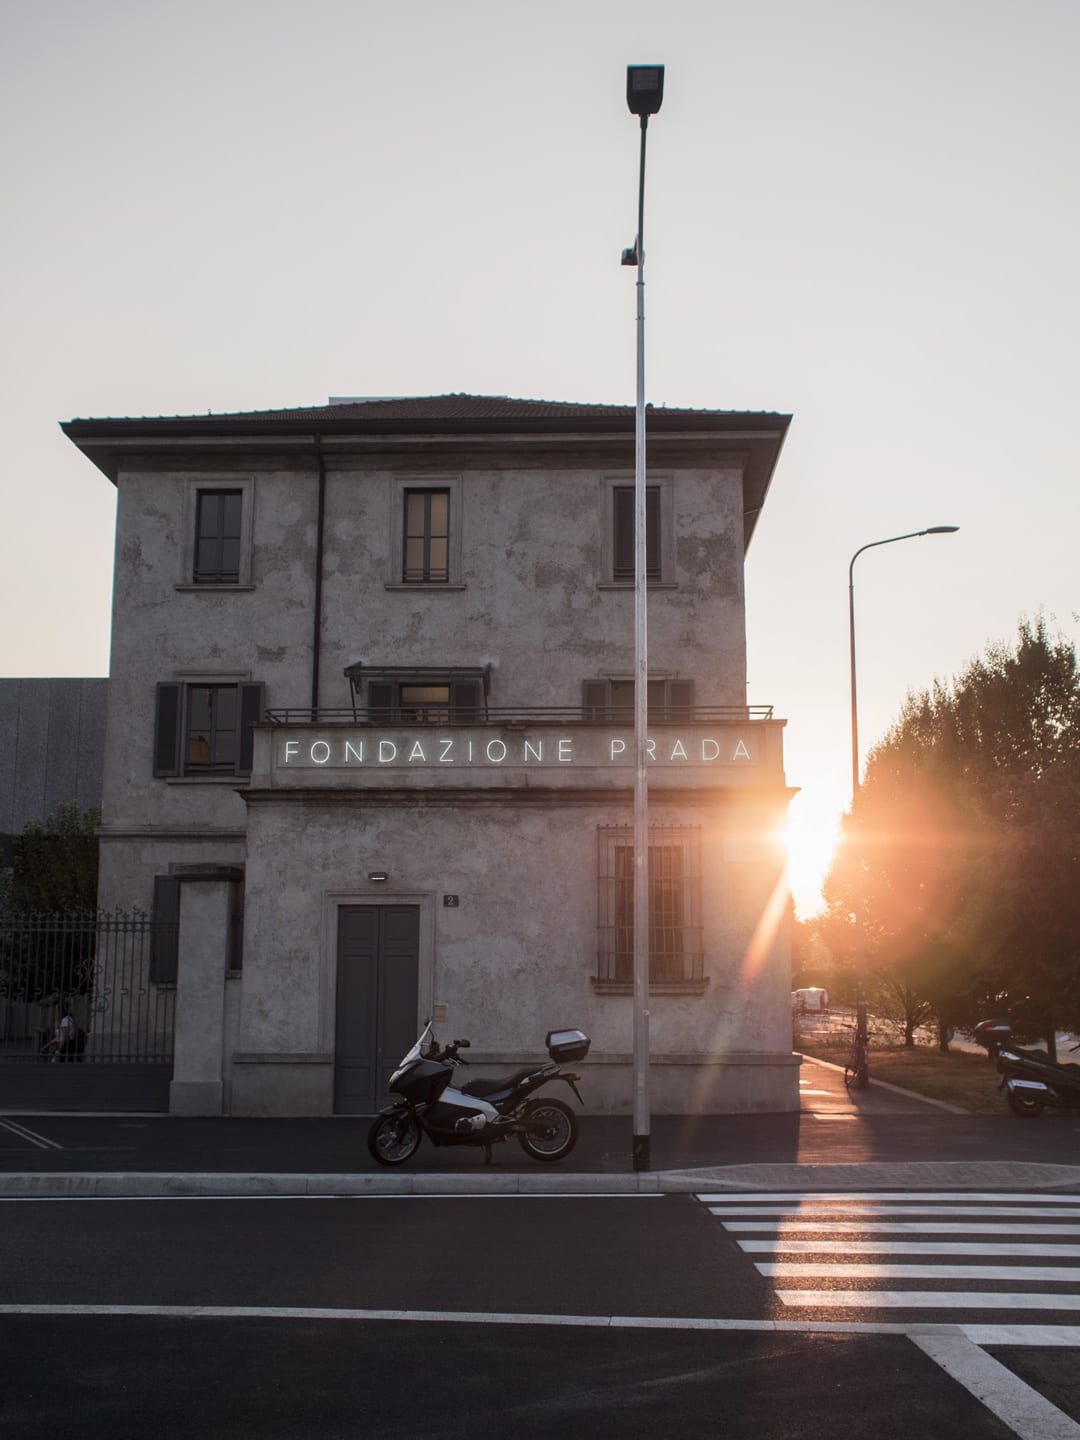 Milan City Guide | Fondazione Prada